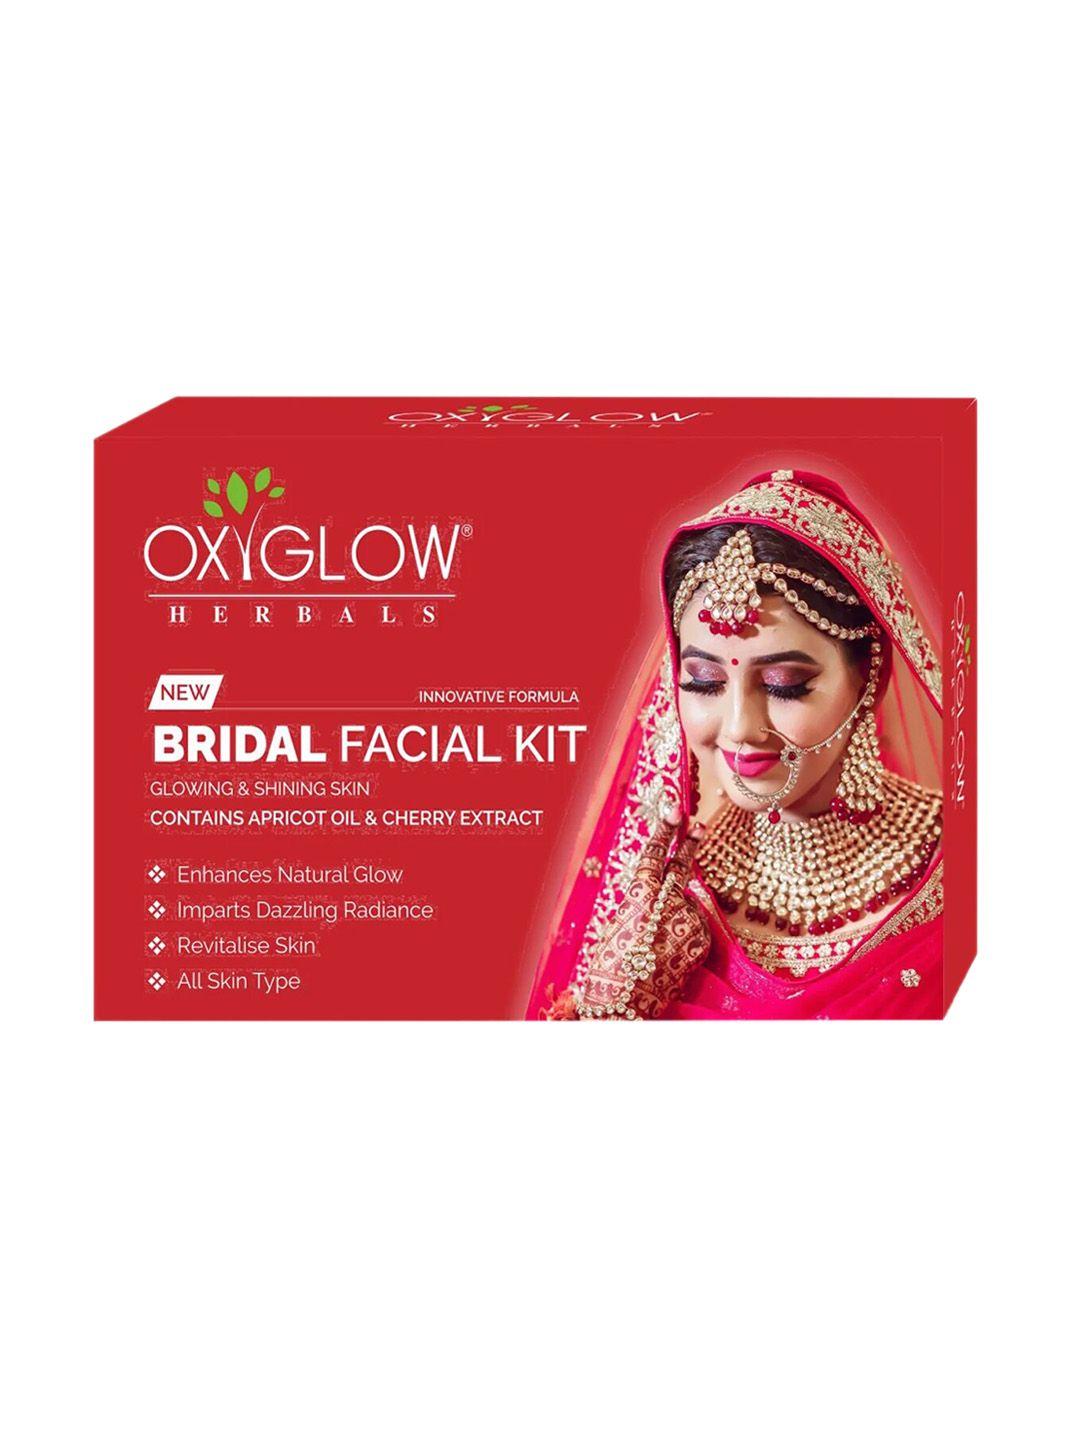 oxyglow bridal facial kit for glowing & shining skin 260g